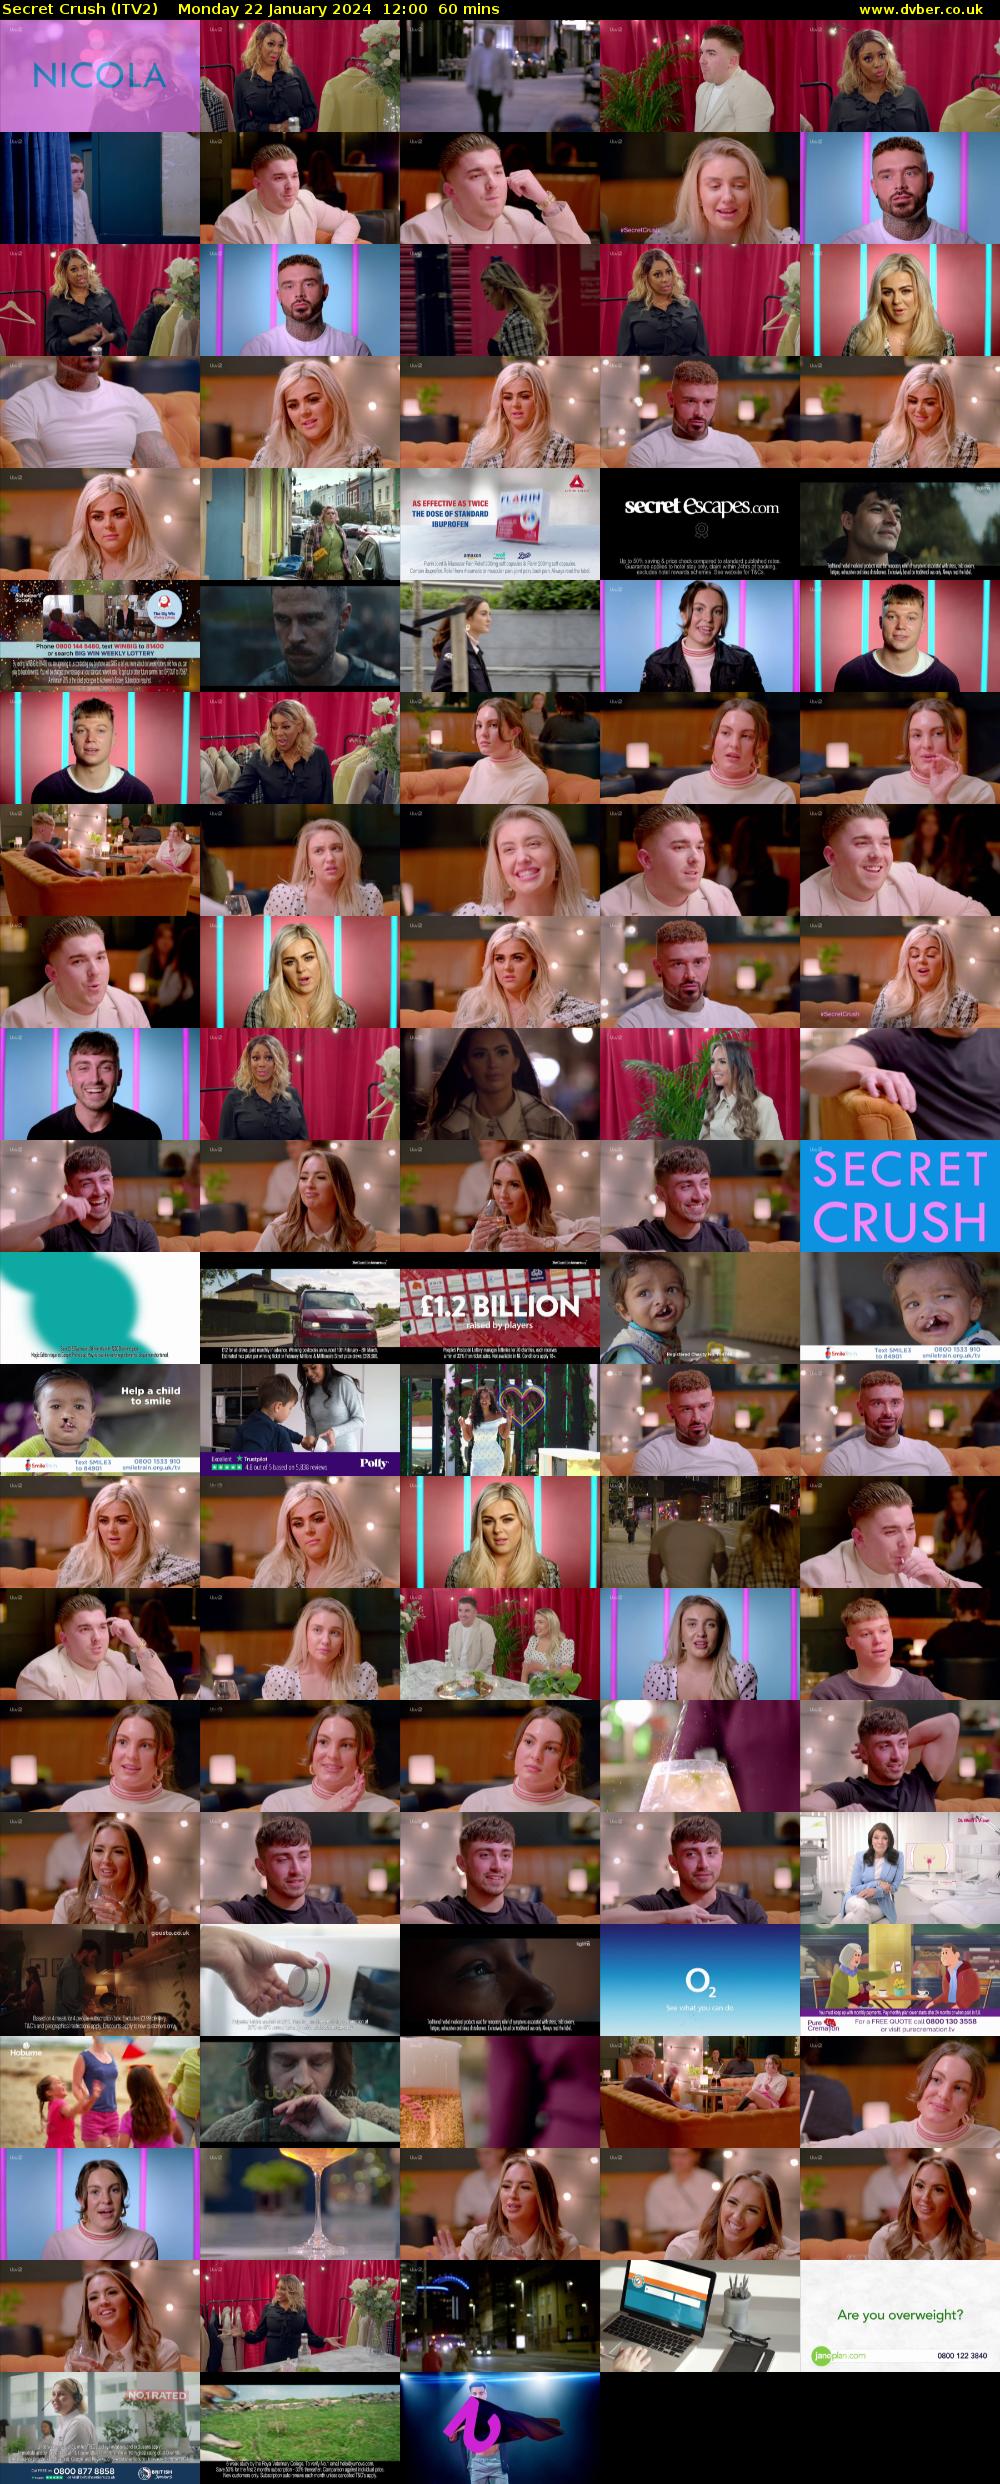 Secret Crush (ITV2) Monday 22 January 2024 12:00 - 13:00